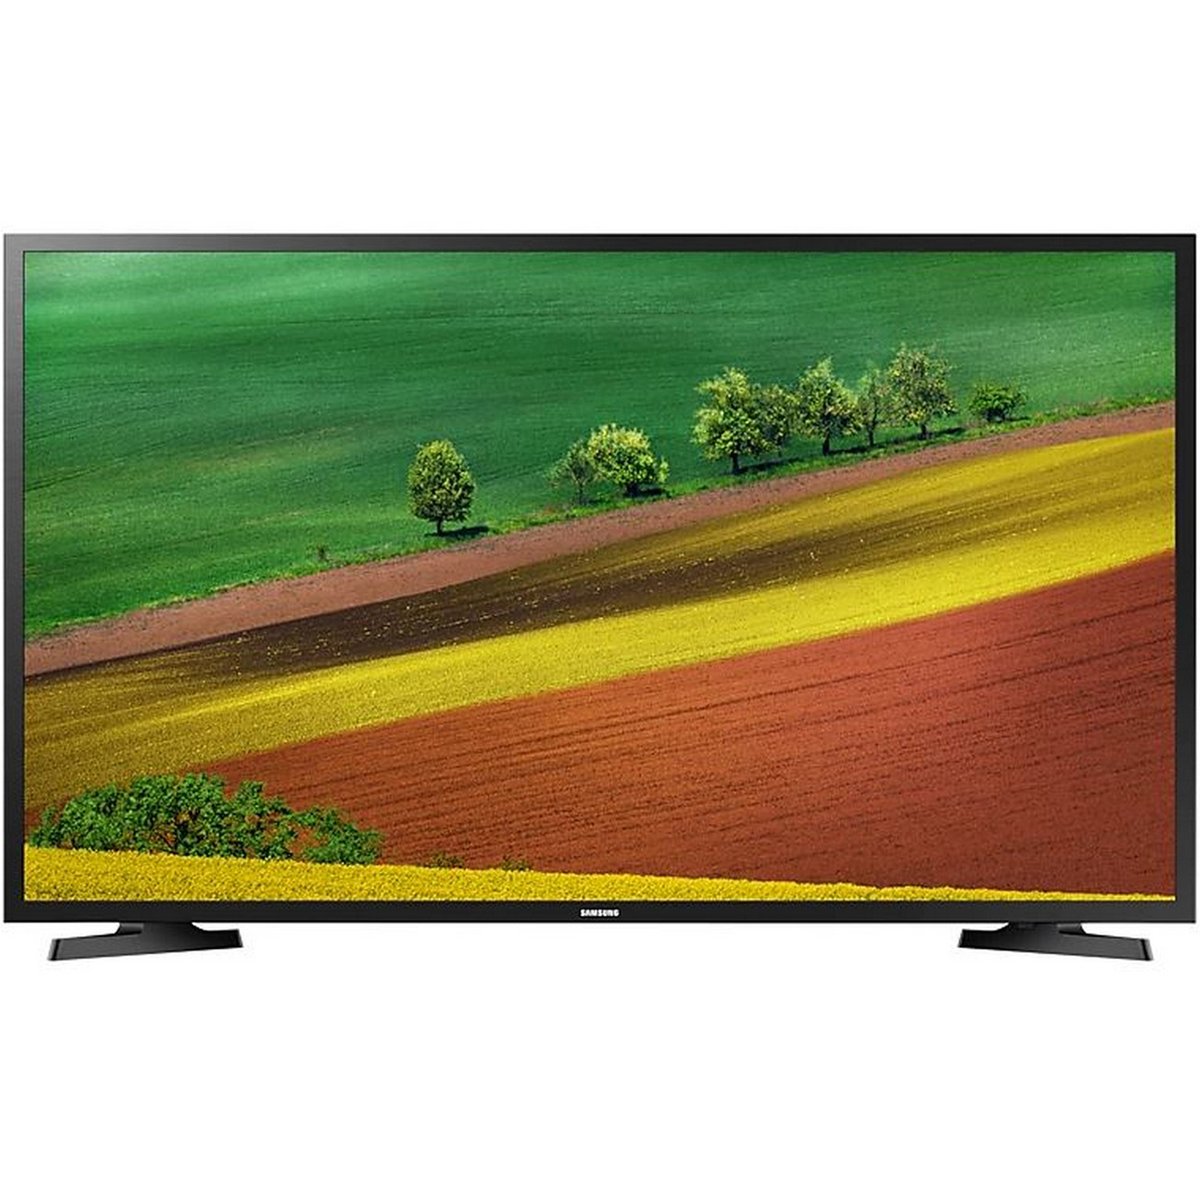 Samsung Smart HD LED TV UA32N5300 32inch